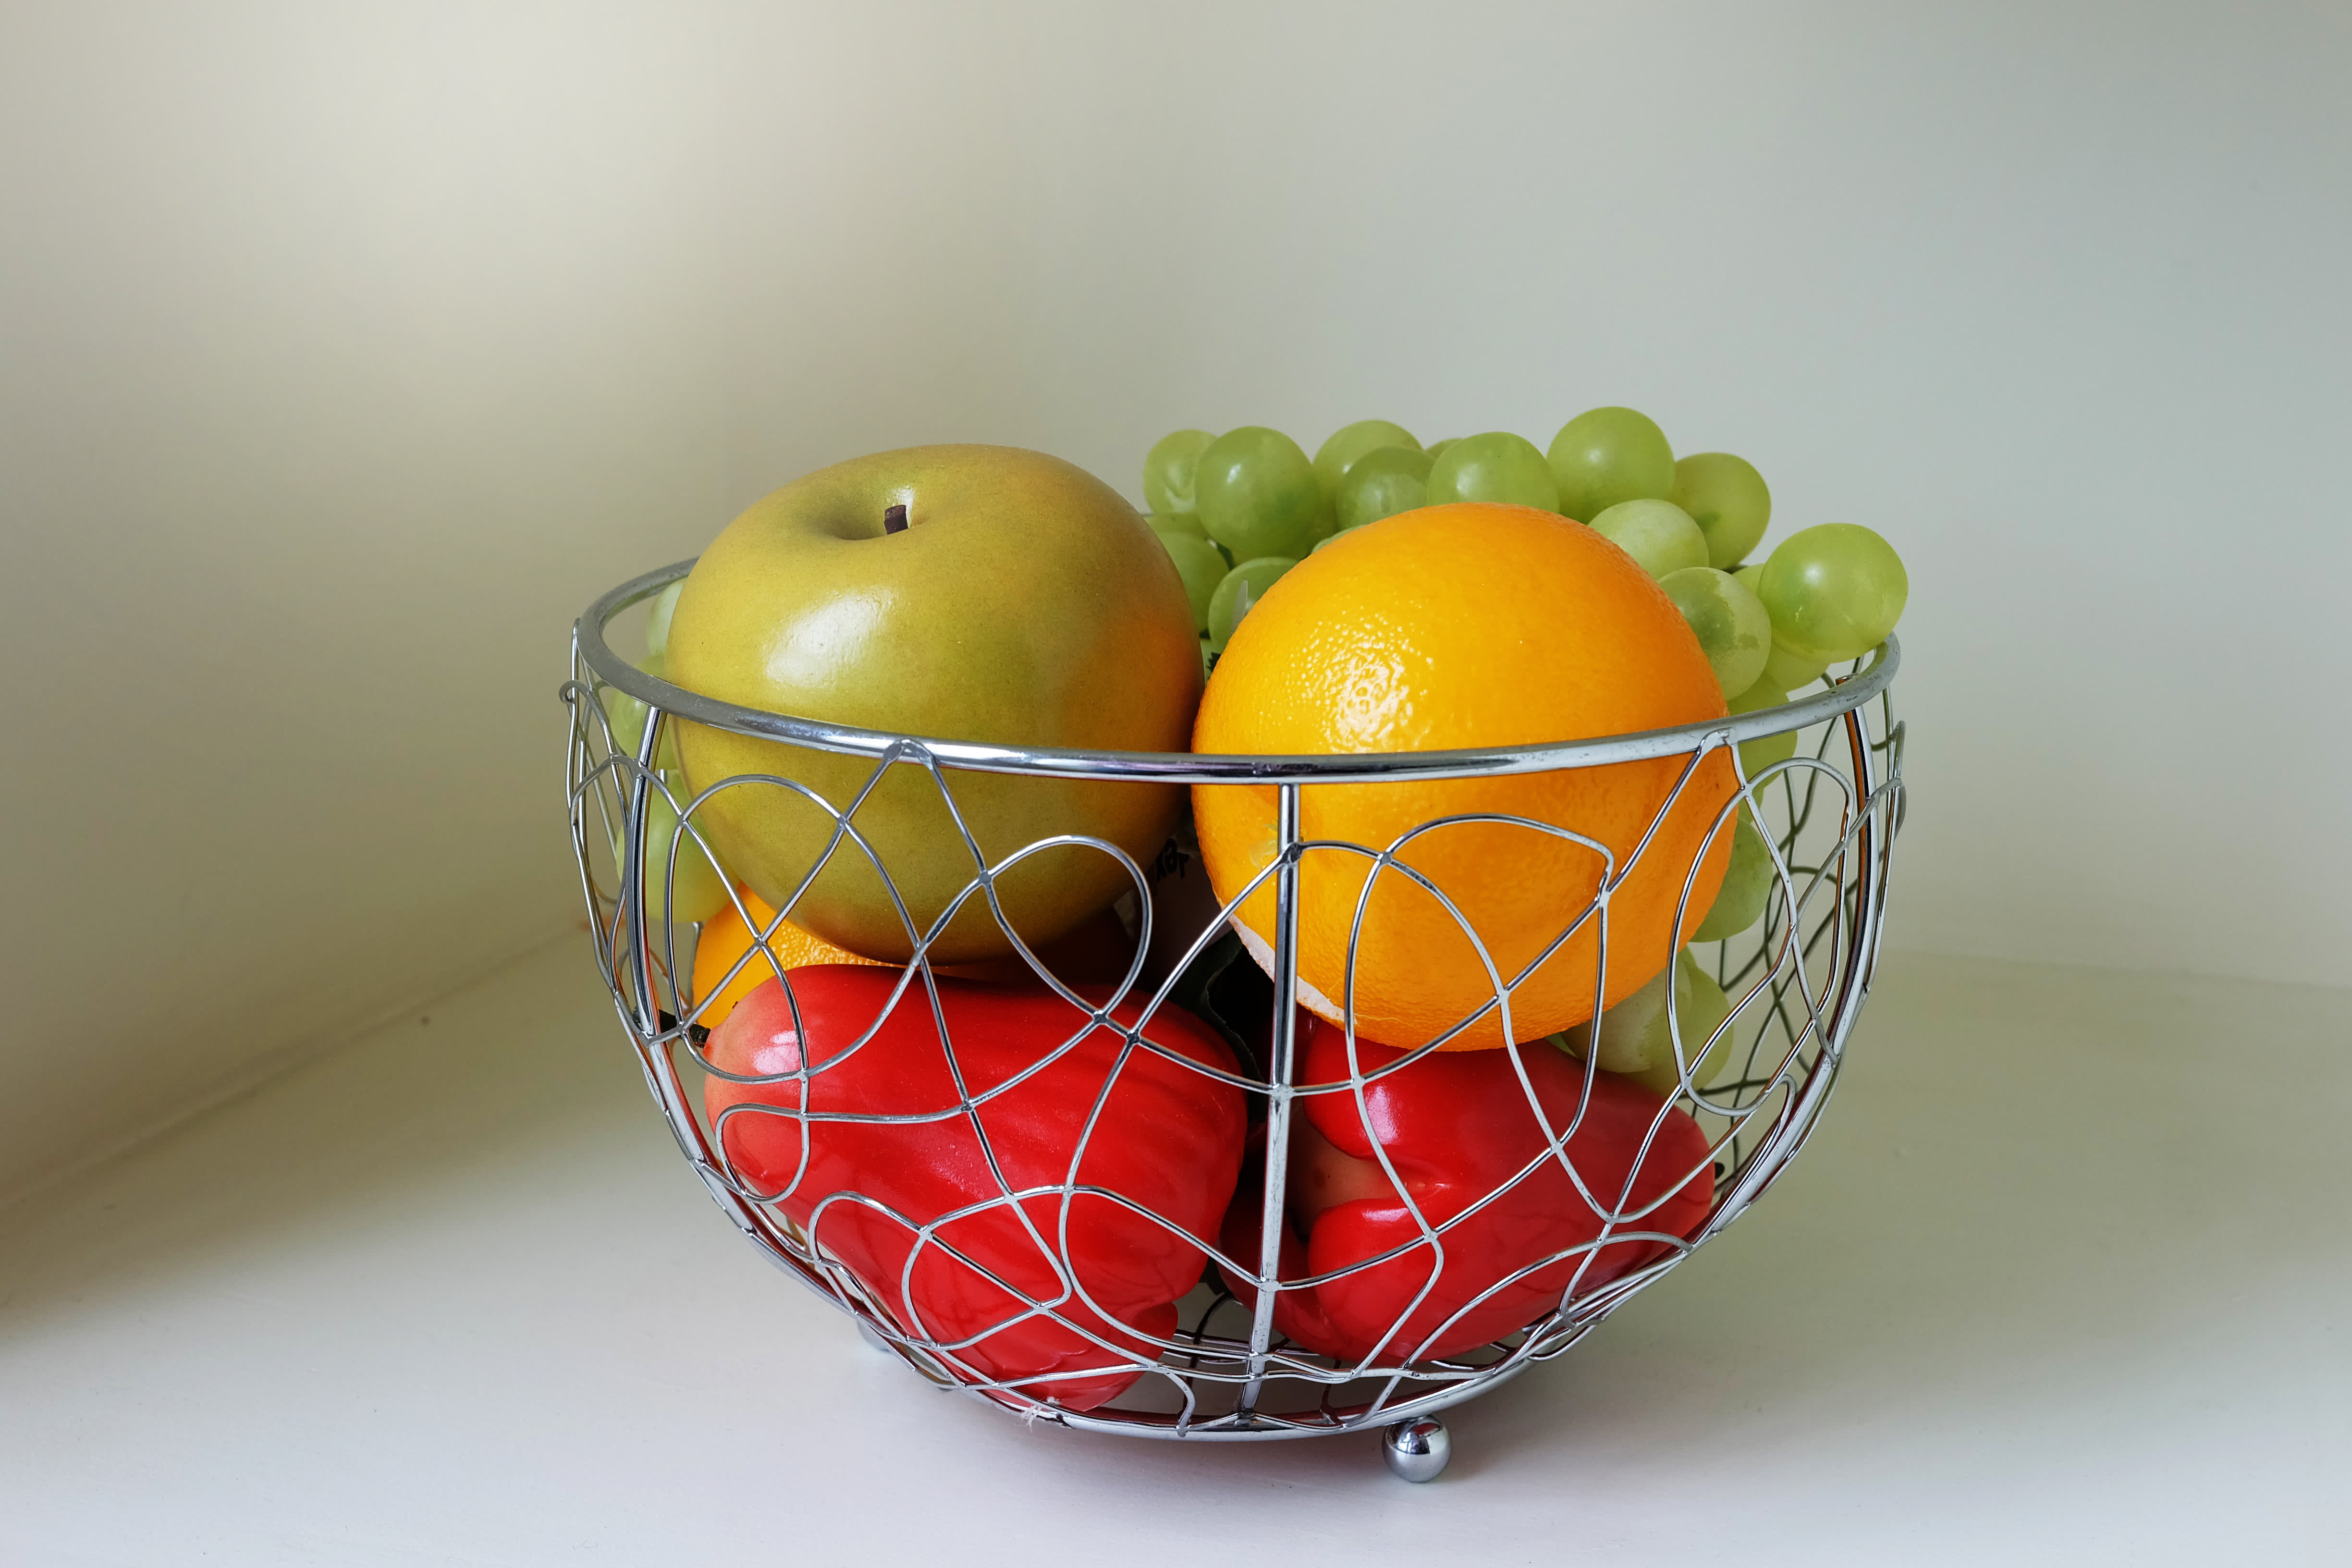 Details about   Artificial Fake Fruits Food Apples Lemon Orange Cherry Lifelike Home Decor USA 